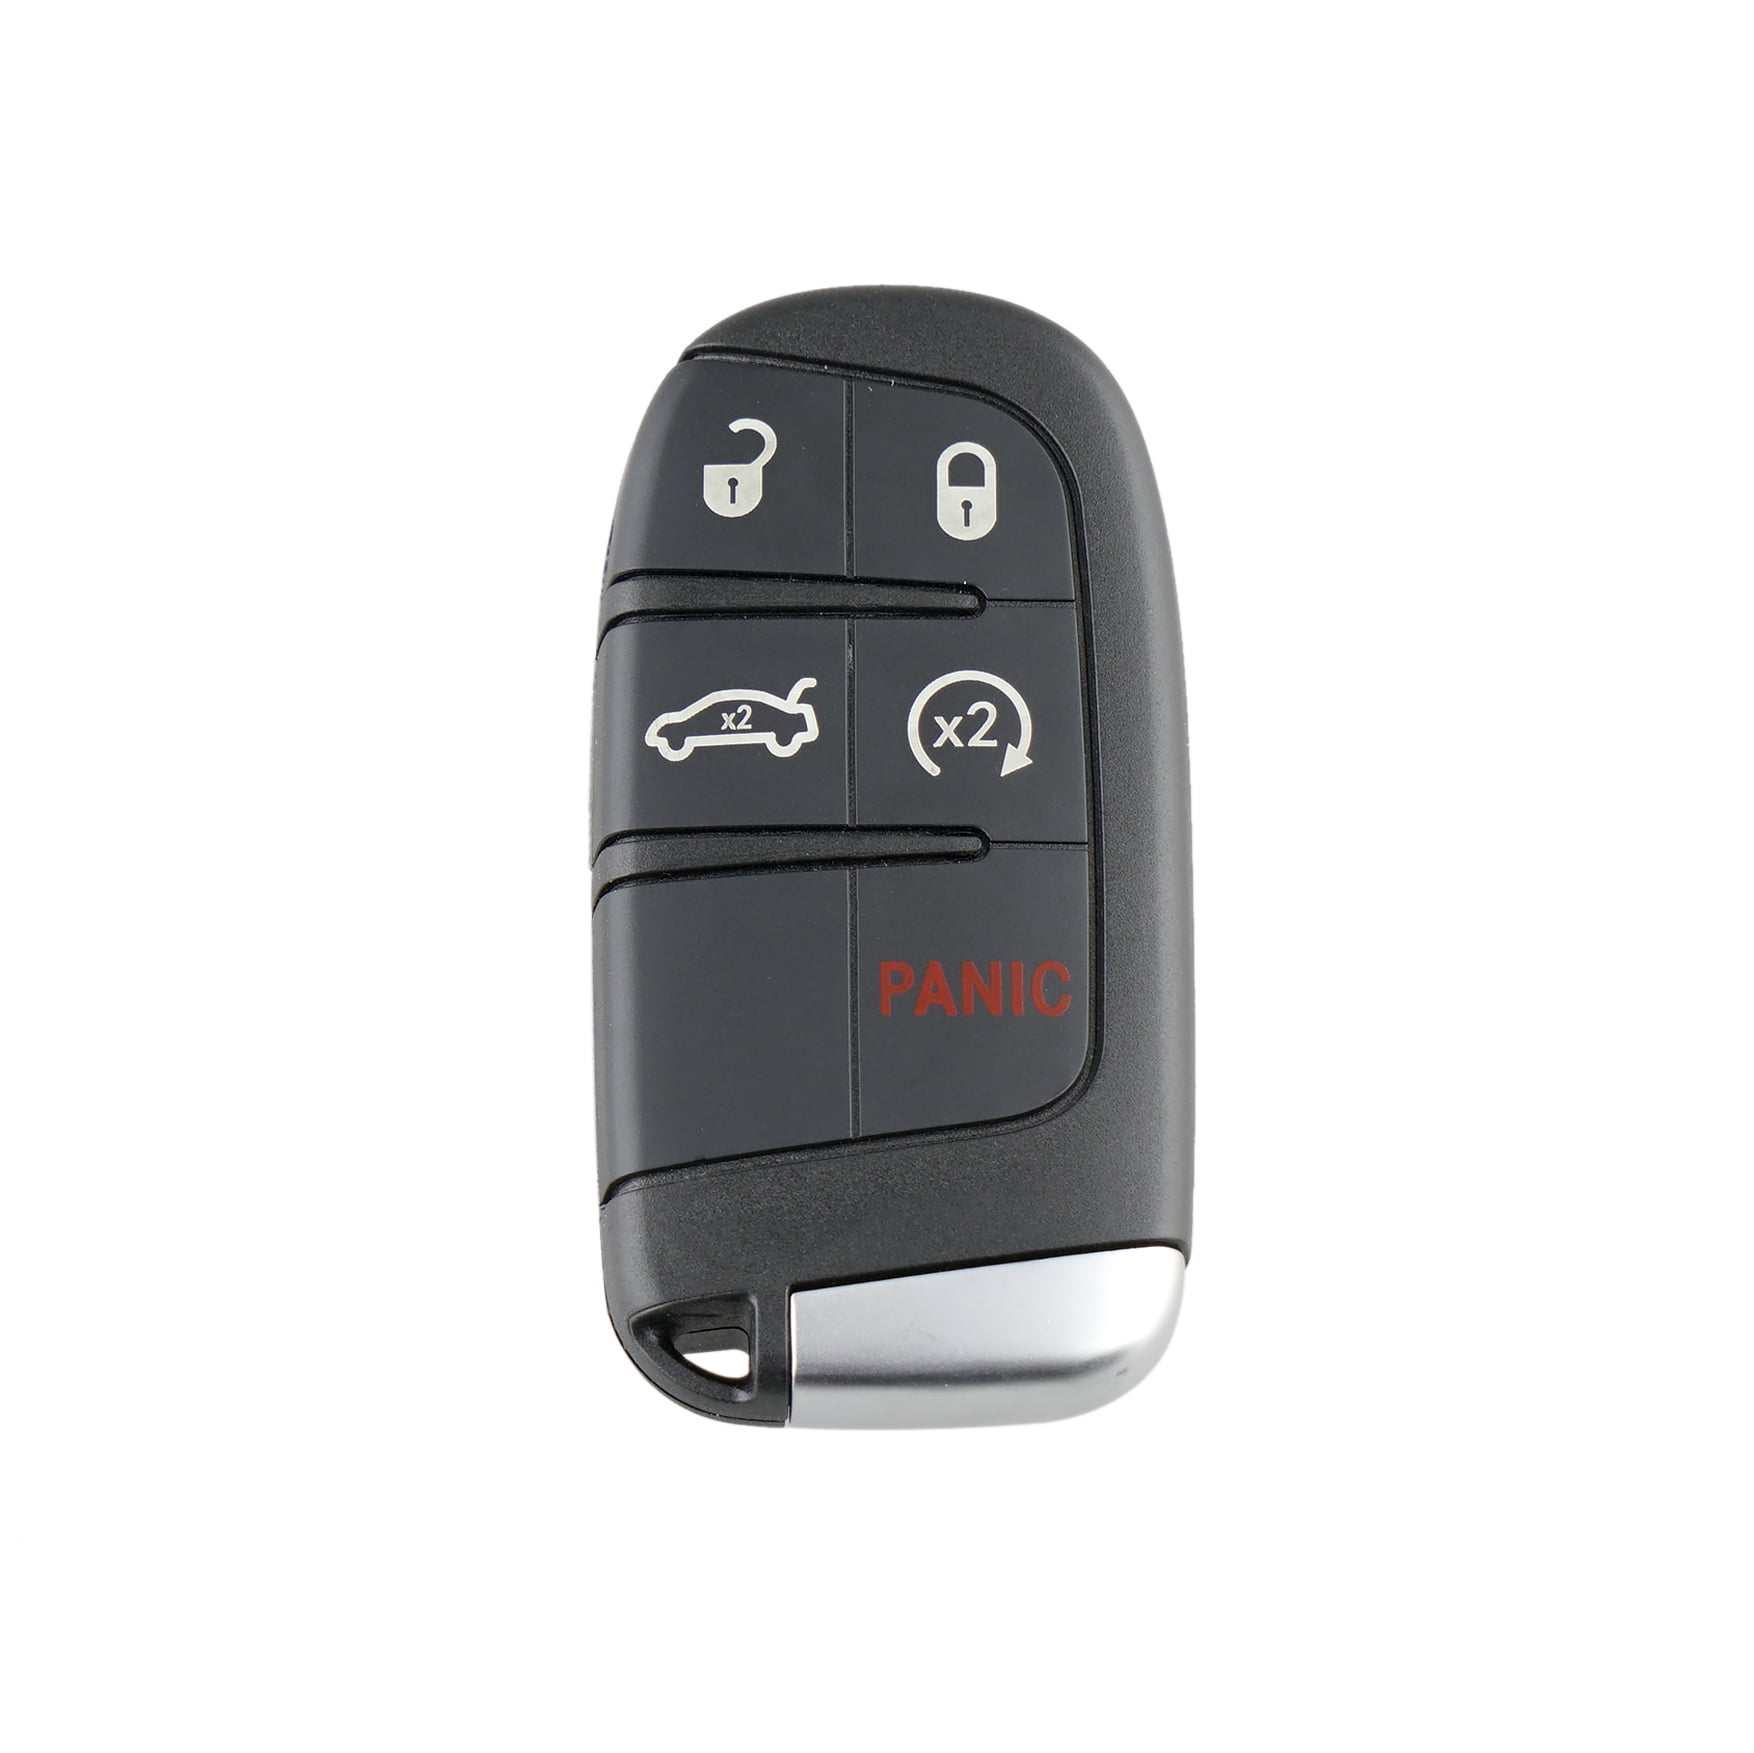 2 OEM Chrysler Logo 300 Remote Start Fobik Key Keyless Fob Transmitter 5 Button 